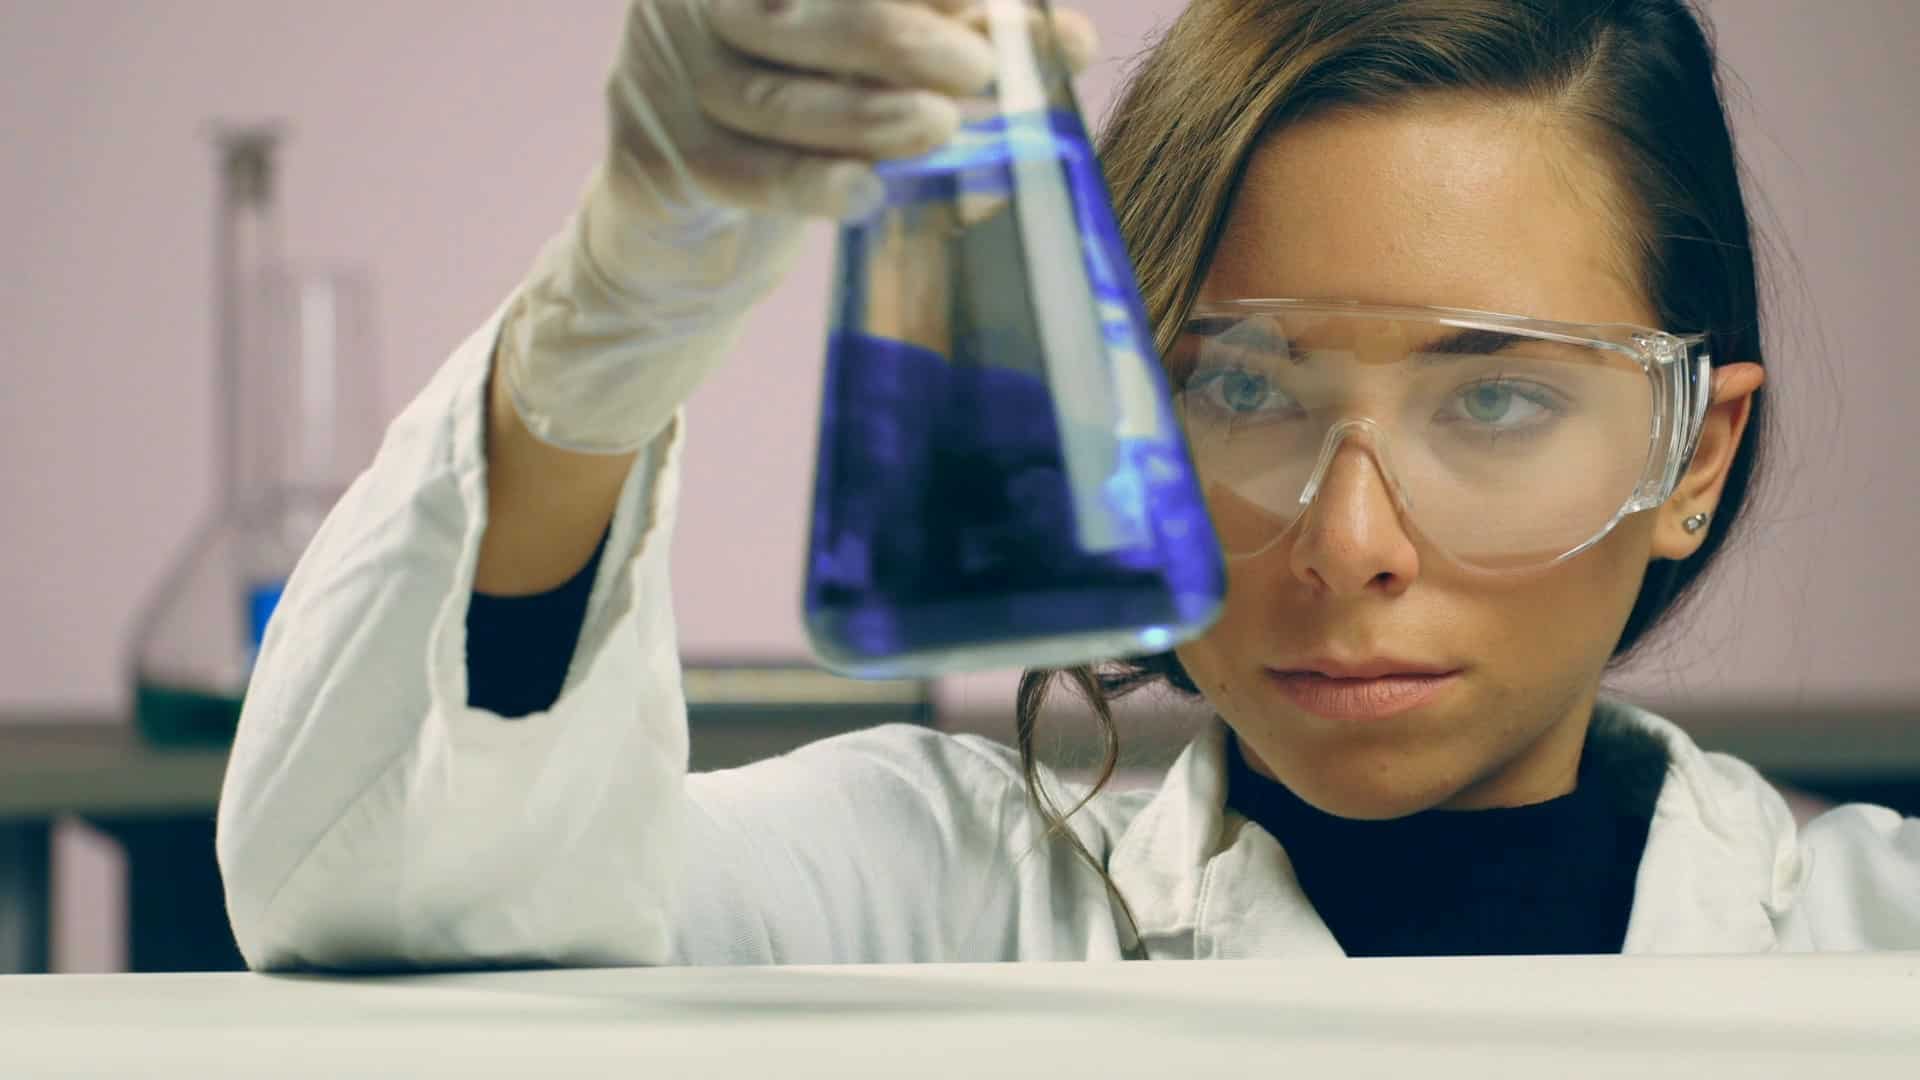 MCE123 Chemist Mixing Fluids Intro Video